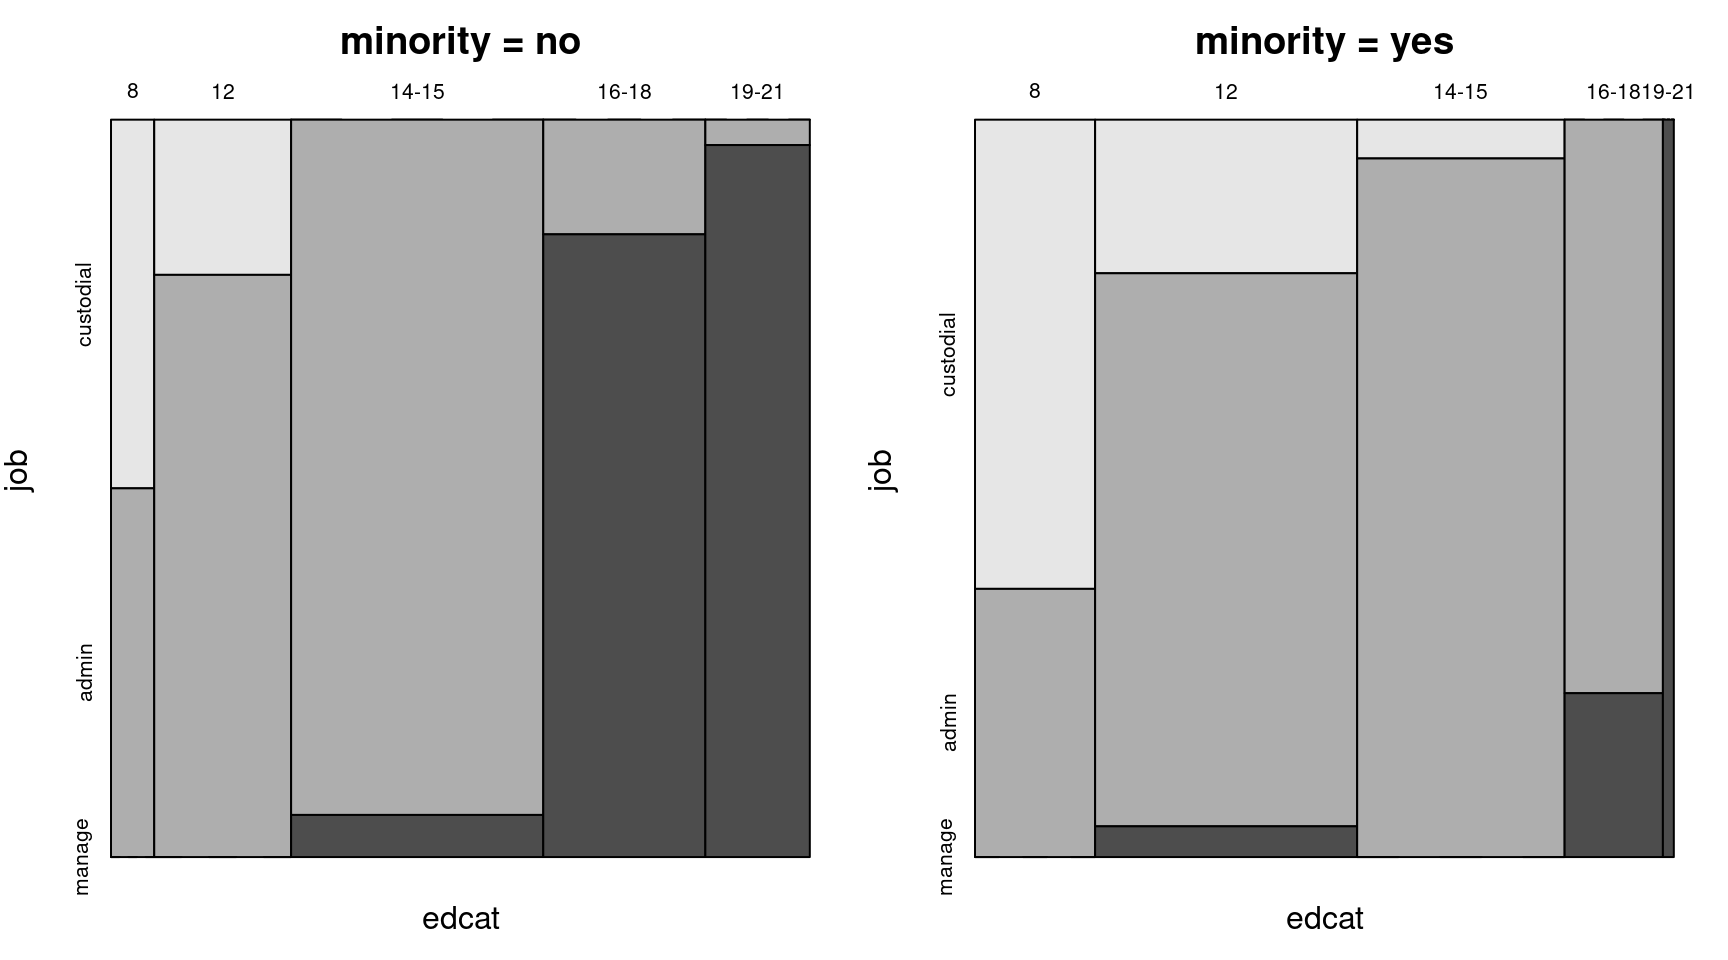 Job vs. education category for non-minority and minority employees